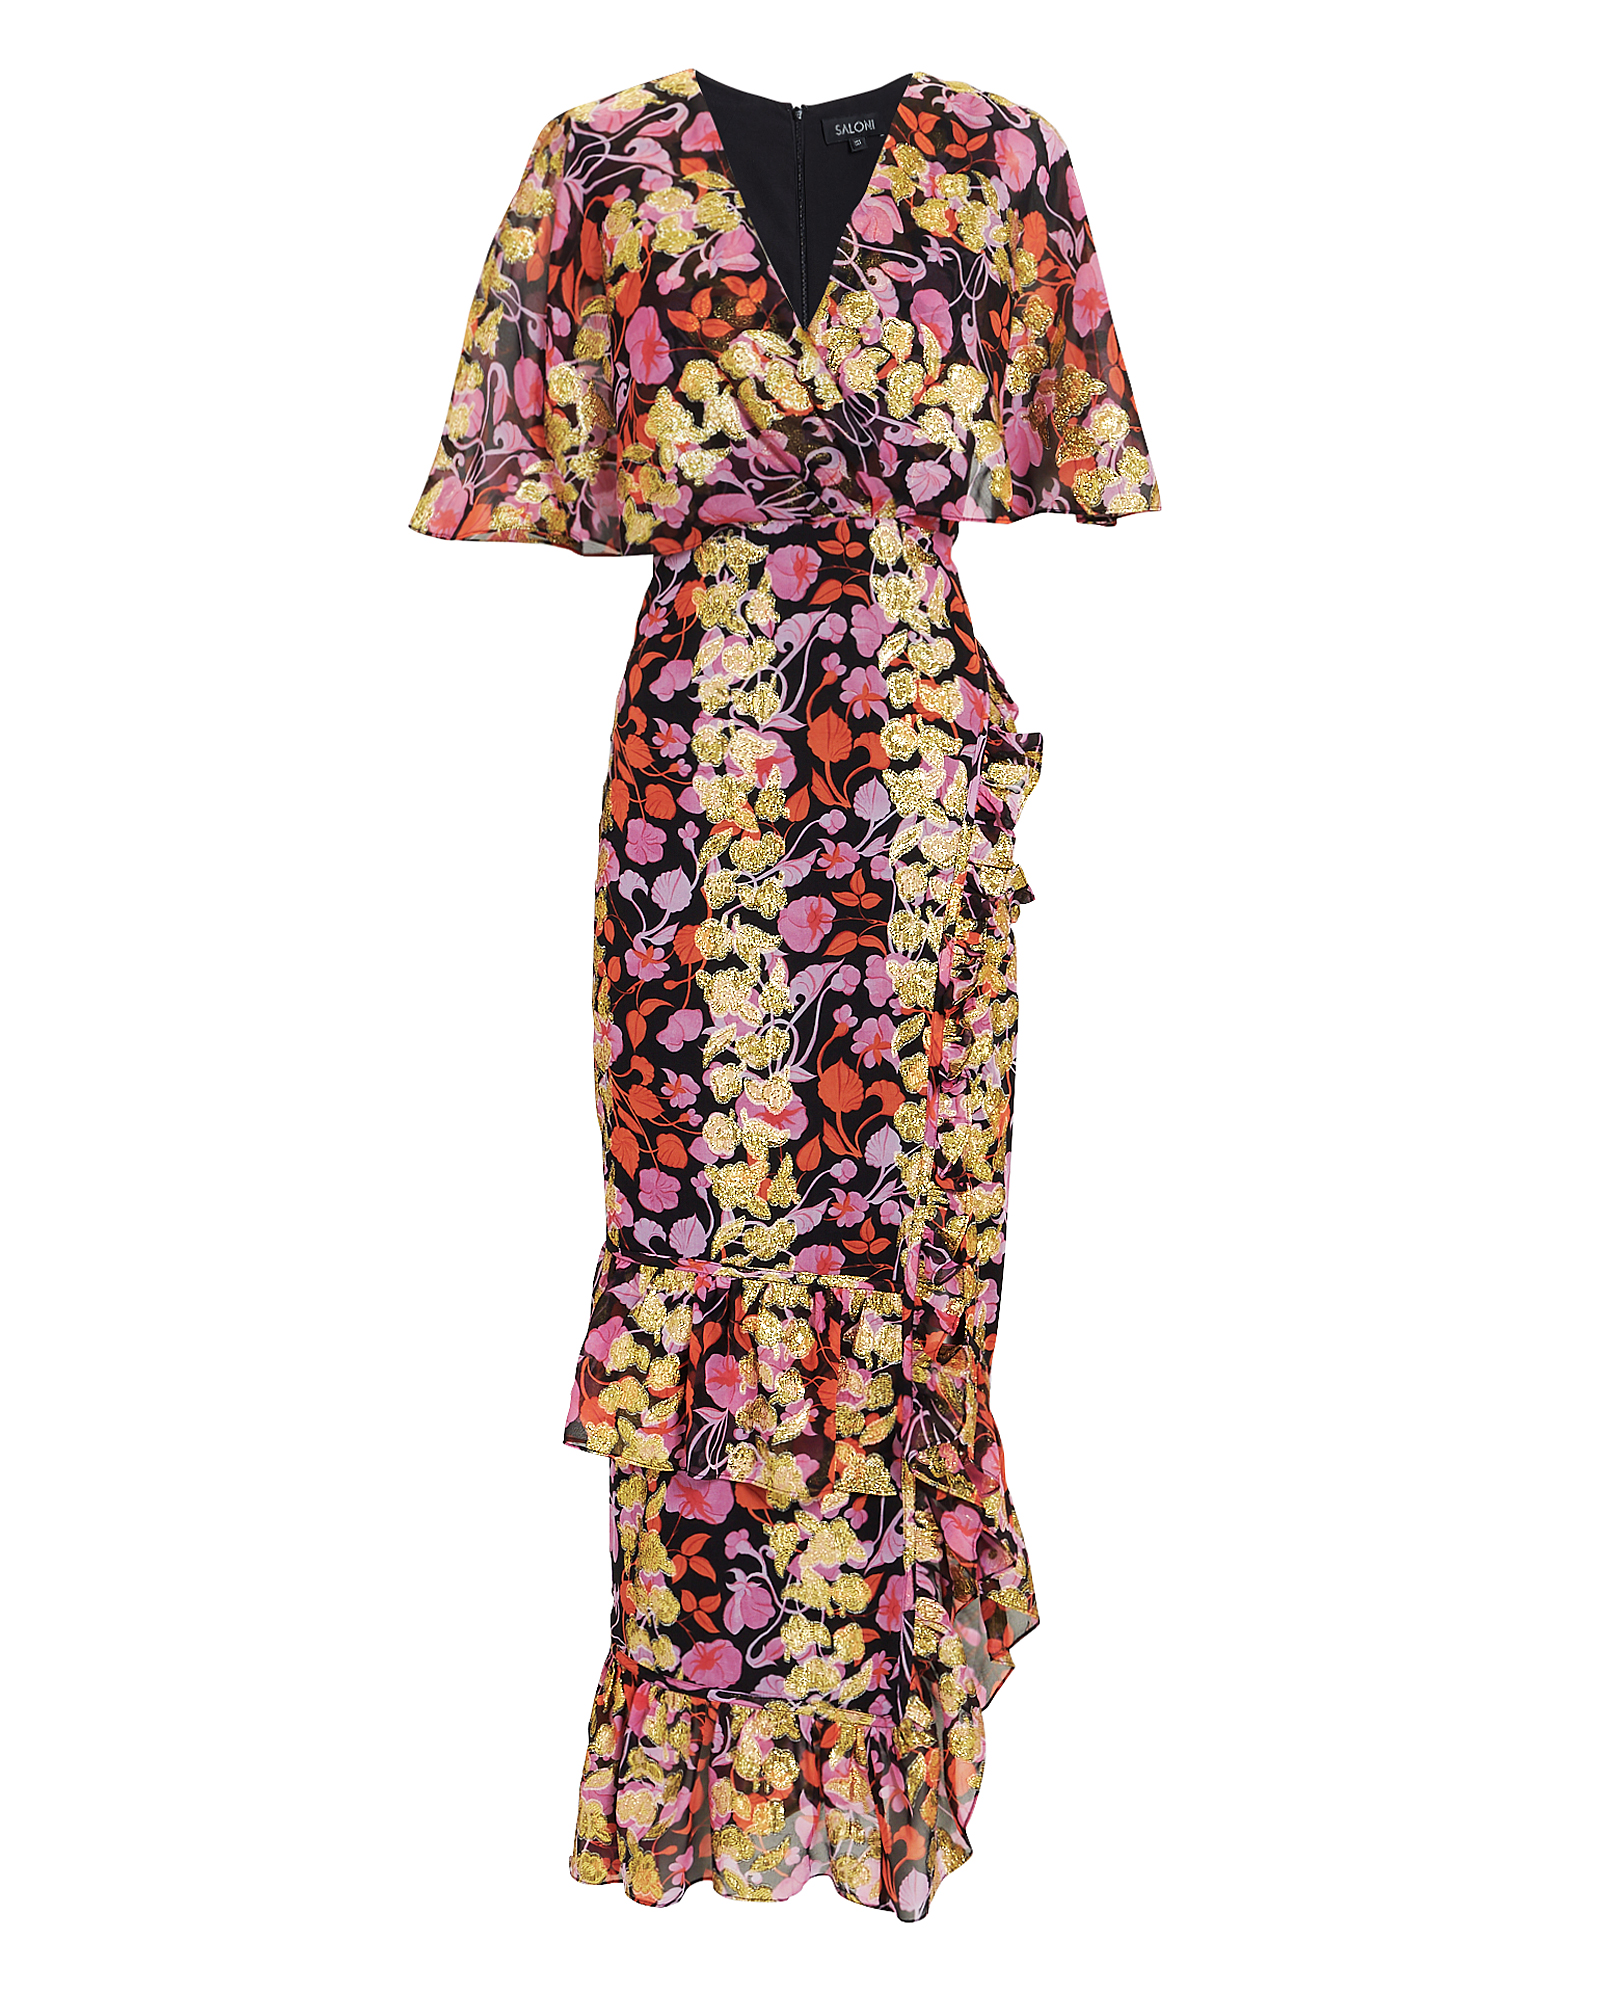 Cape Overlay Metallic Floral Midi Dress